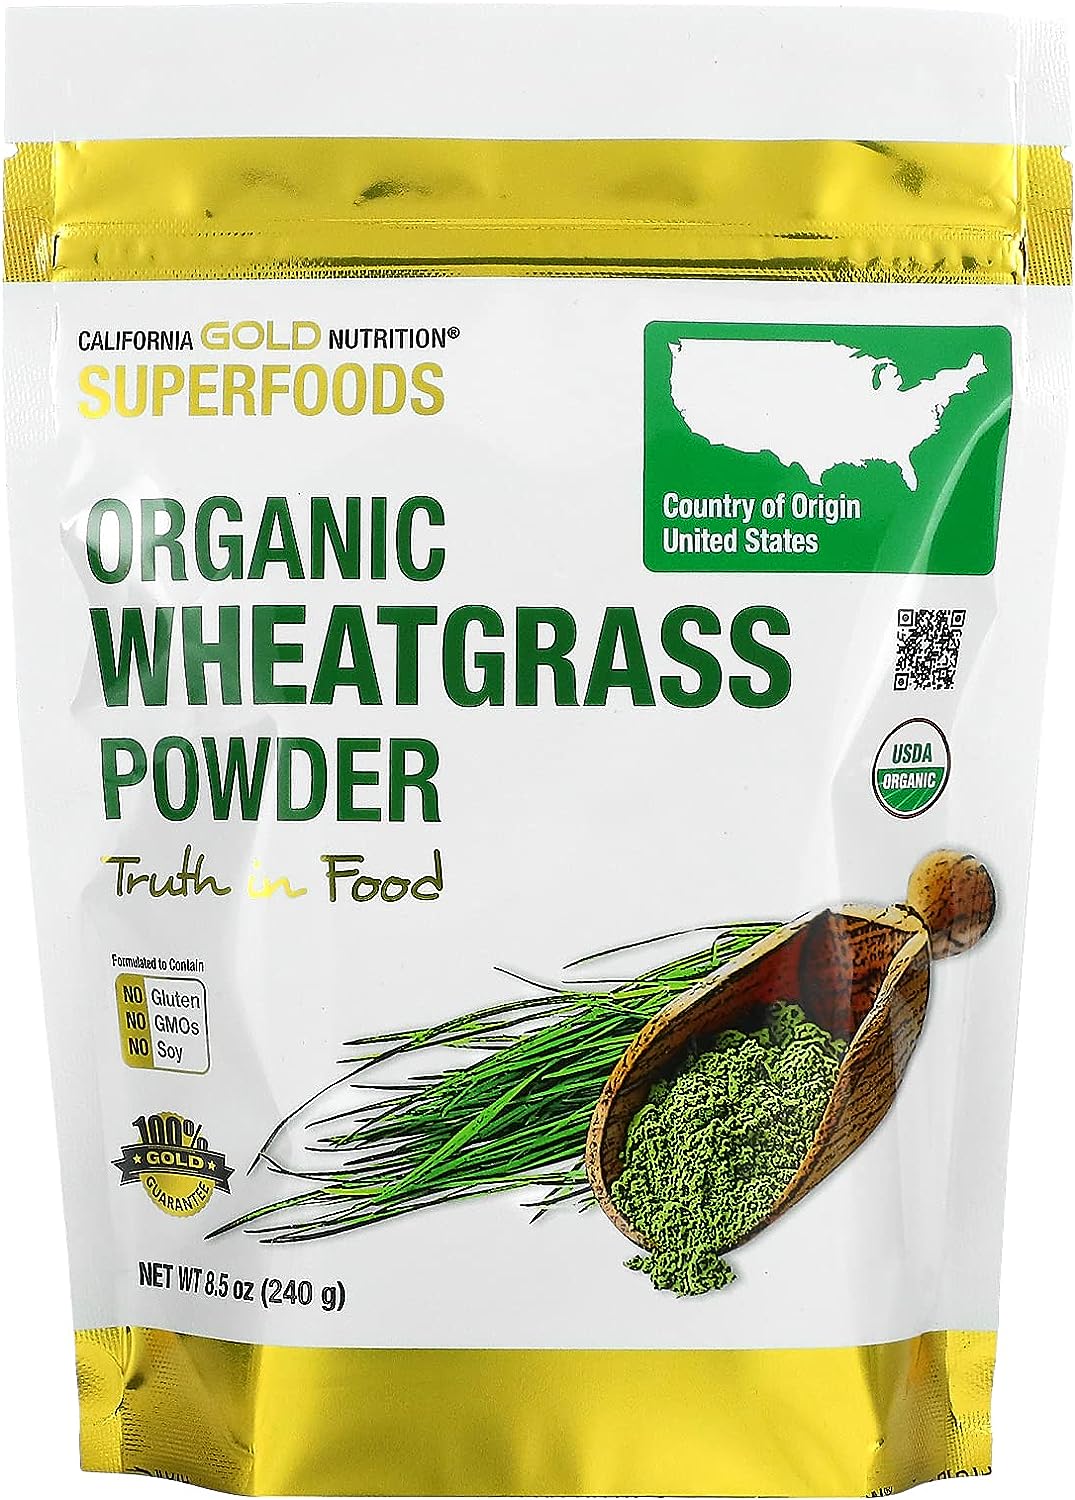 California Gold Nutrition SUPERFOODS - Organic Wheat Grass Powder, 8.5 oz (240 g)  - купить